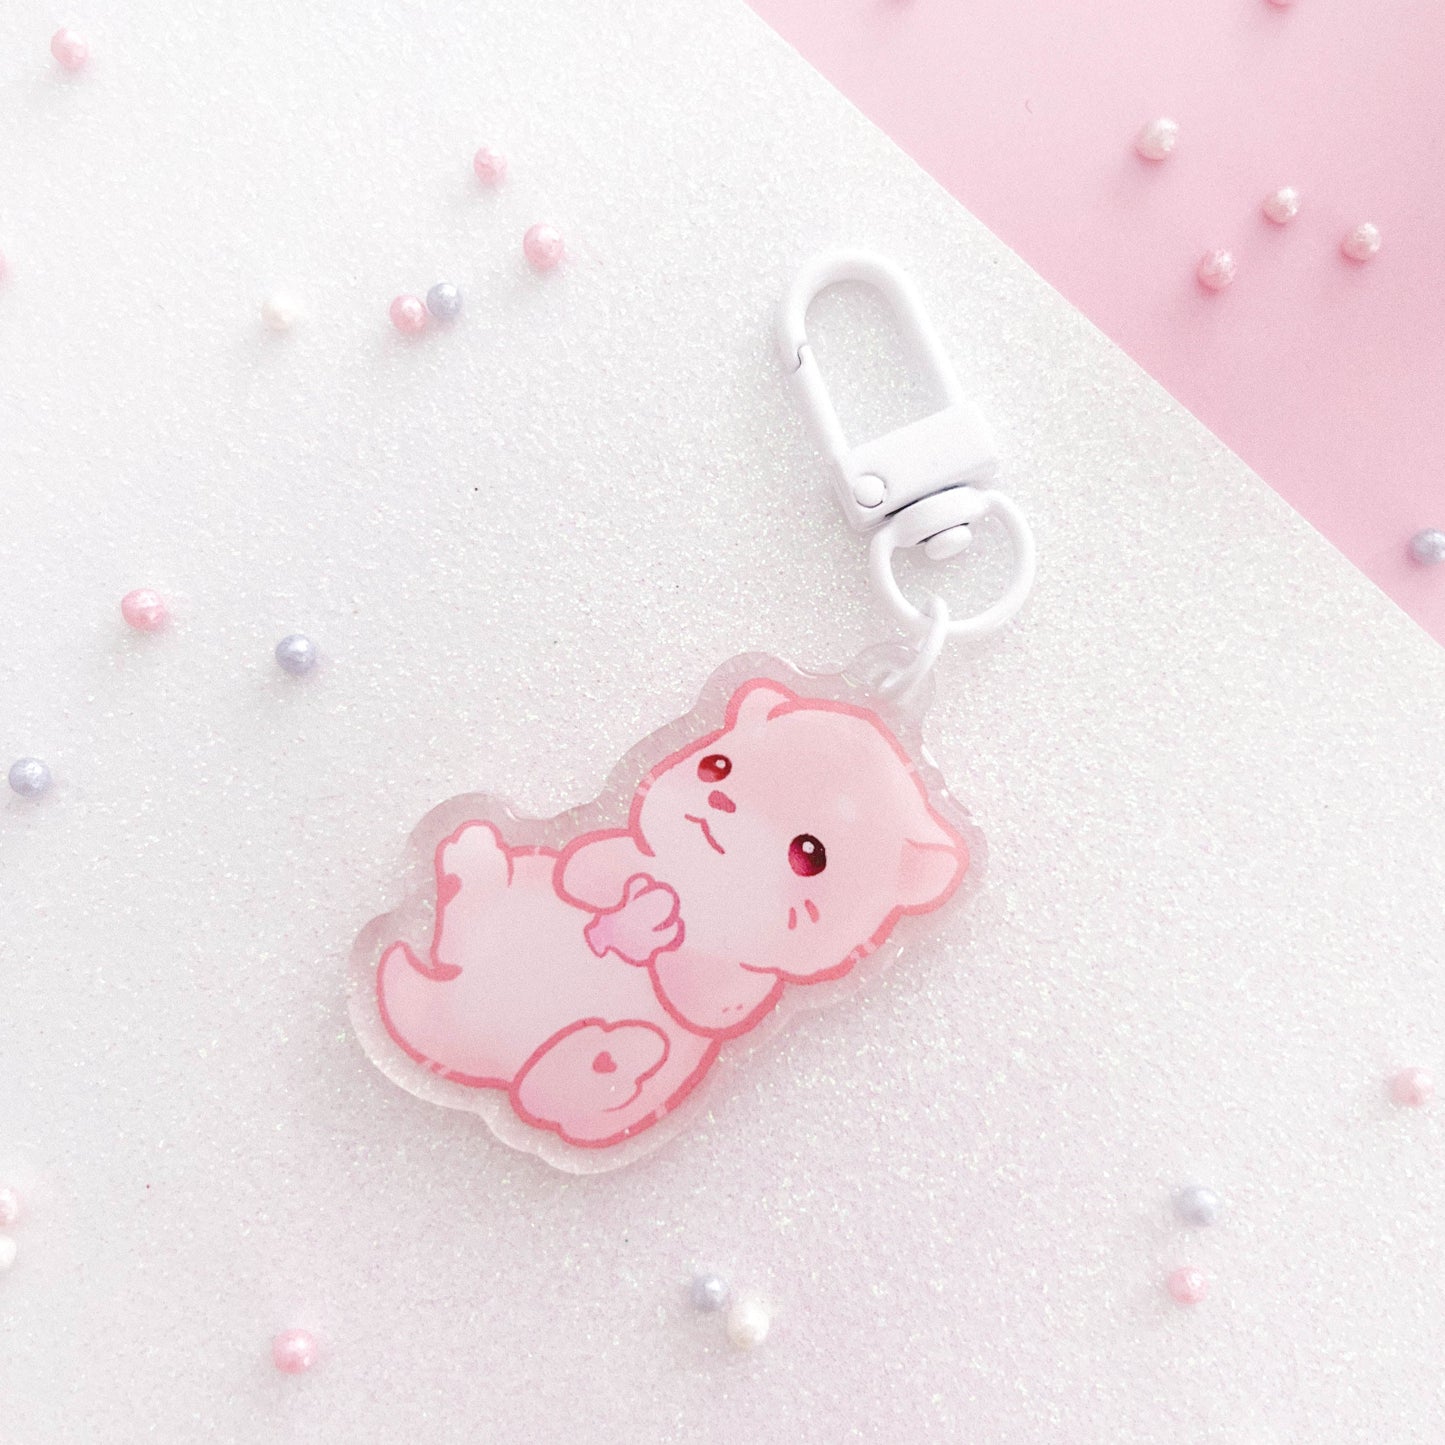 Adorable Otter Acrylic Keychain | Sweet Animal Art | Cute Otters Key Charm | Aesthetic Birthday Gift for Her | Christmas Present | Miamouz